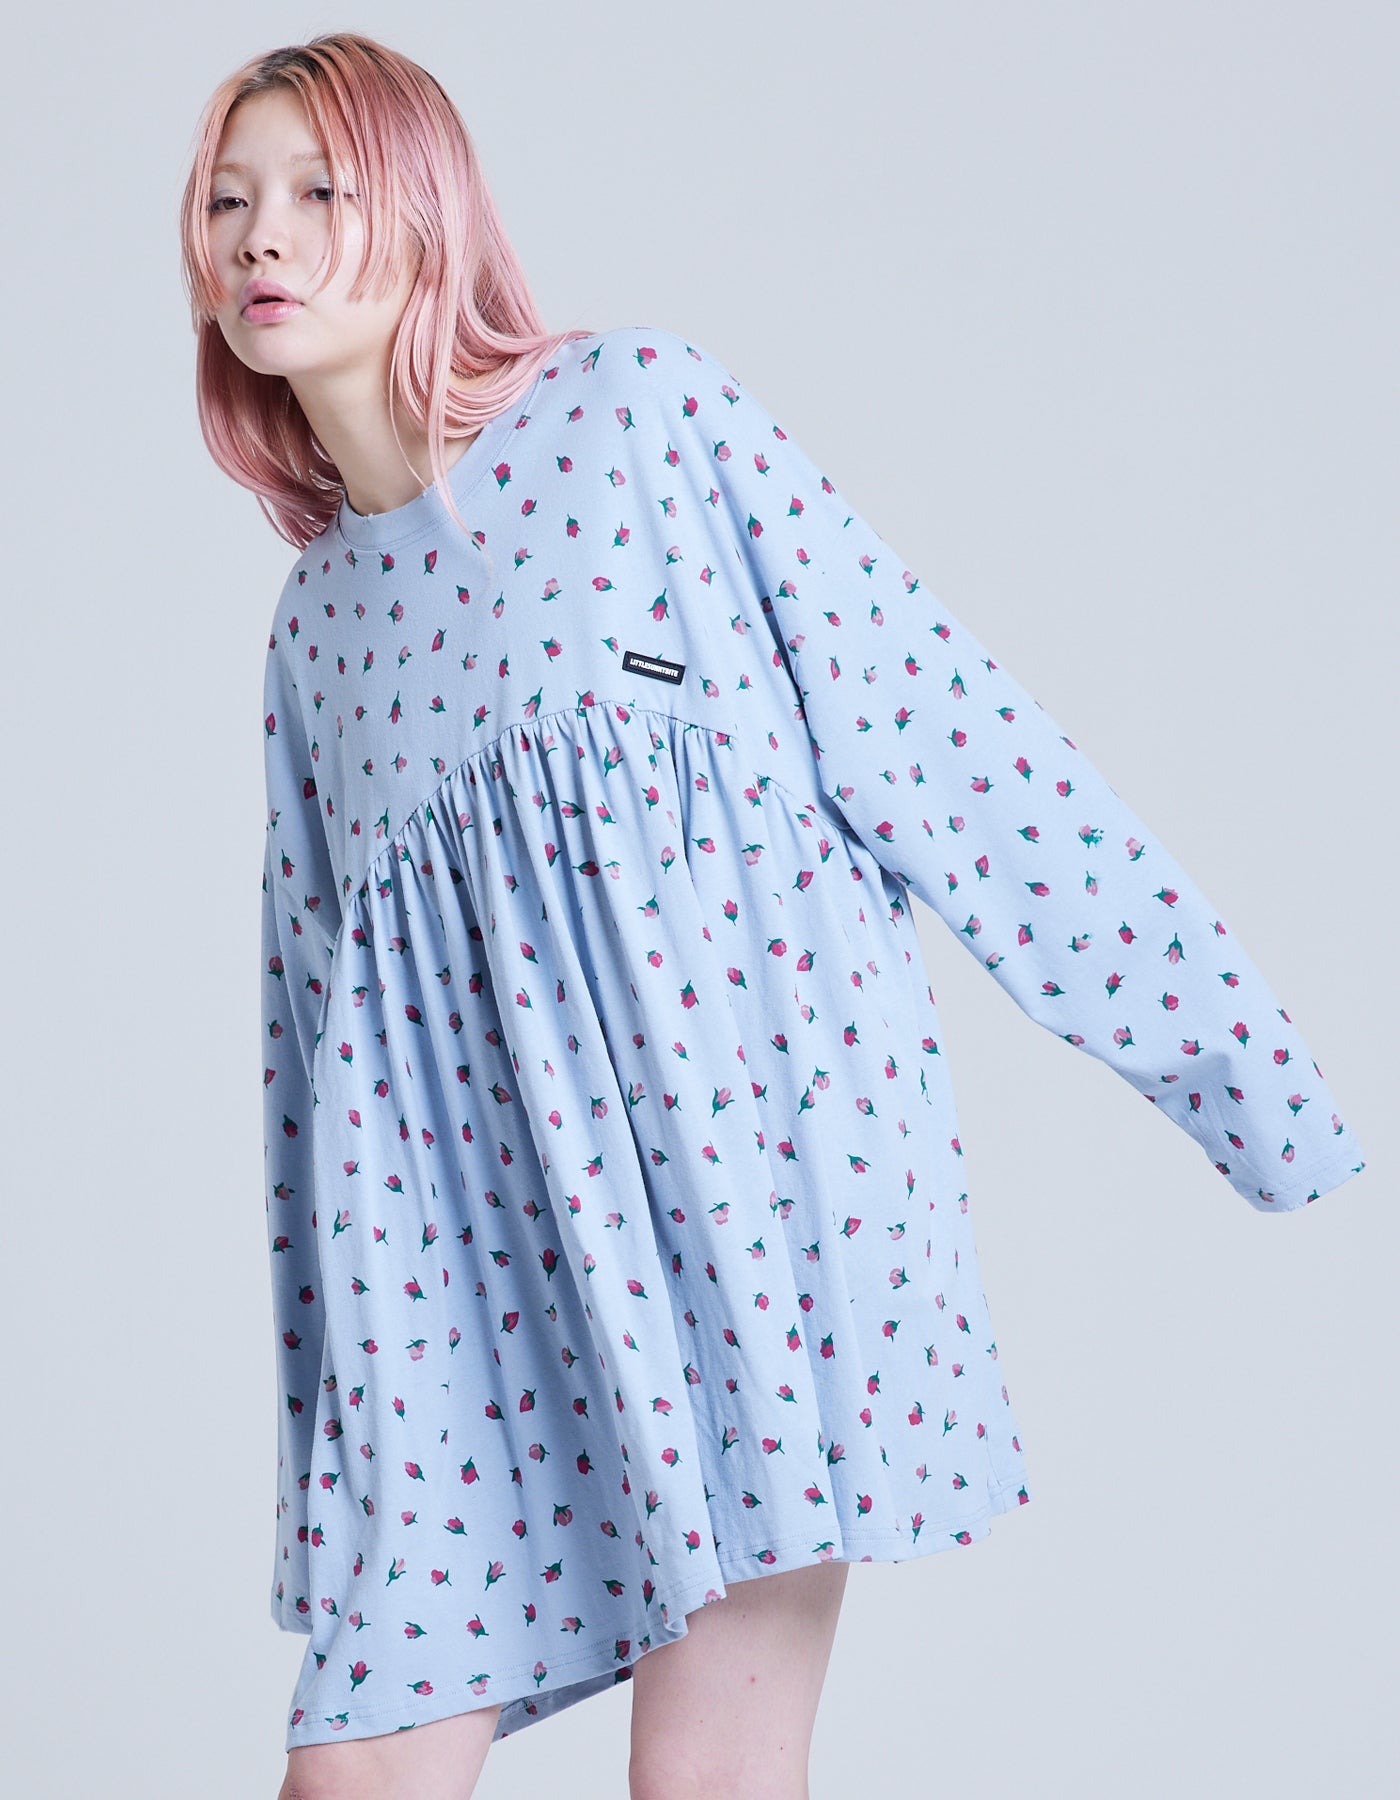 little sunny bite (リトルサニーバイト)rose print tee dress / BLUE 